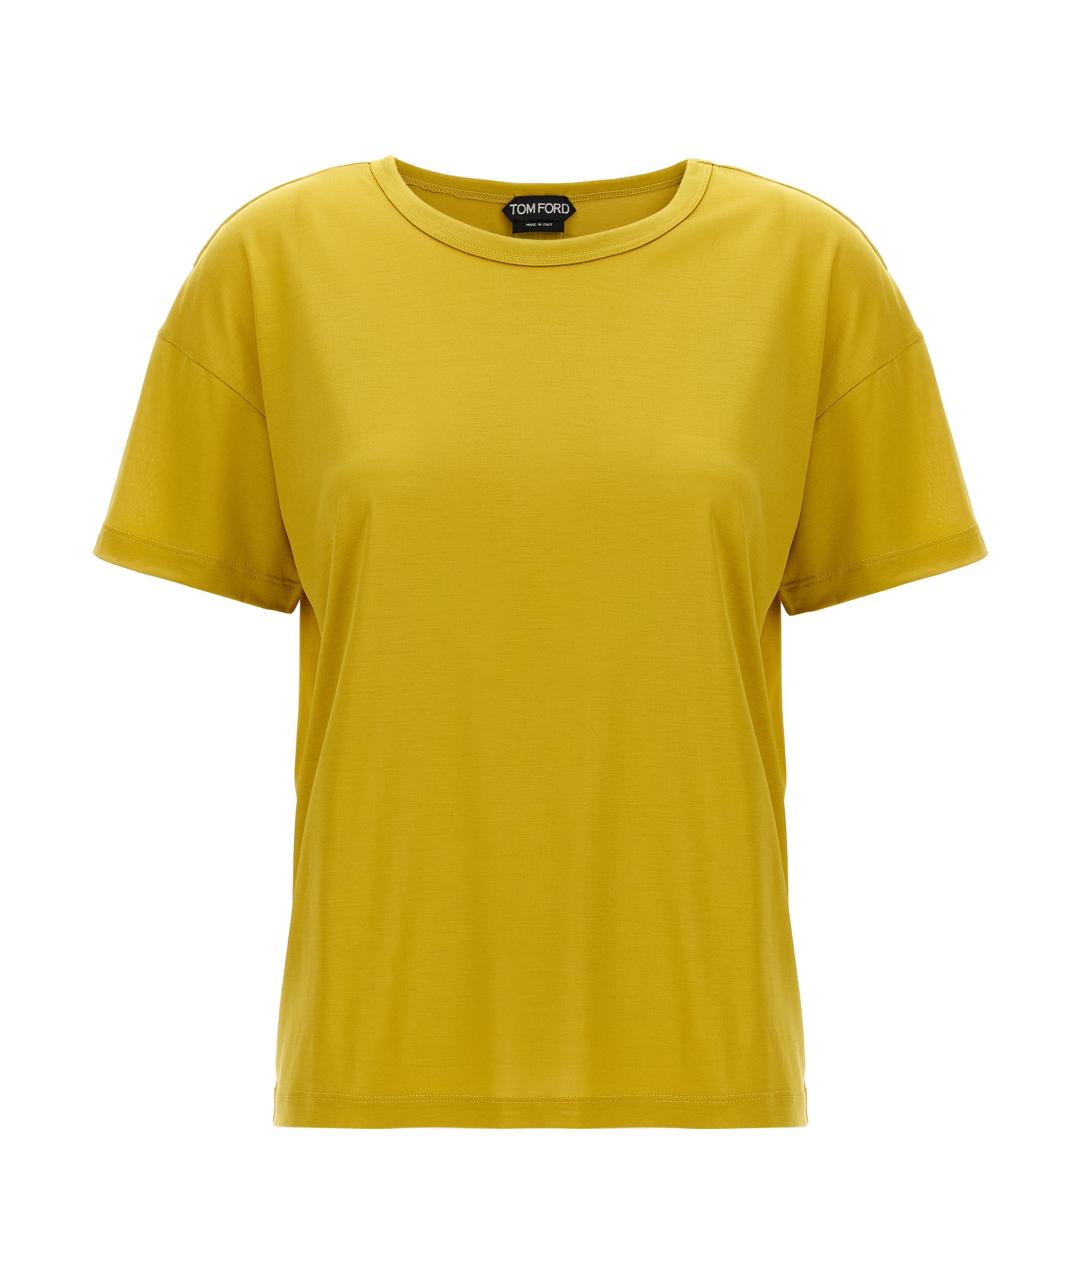 TOM FORD Желтая шелковая футболка, фото 1